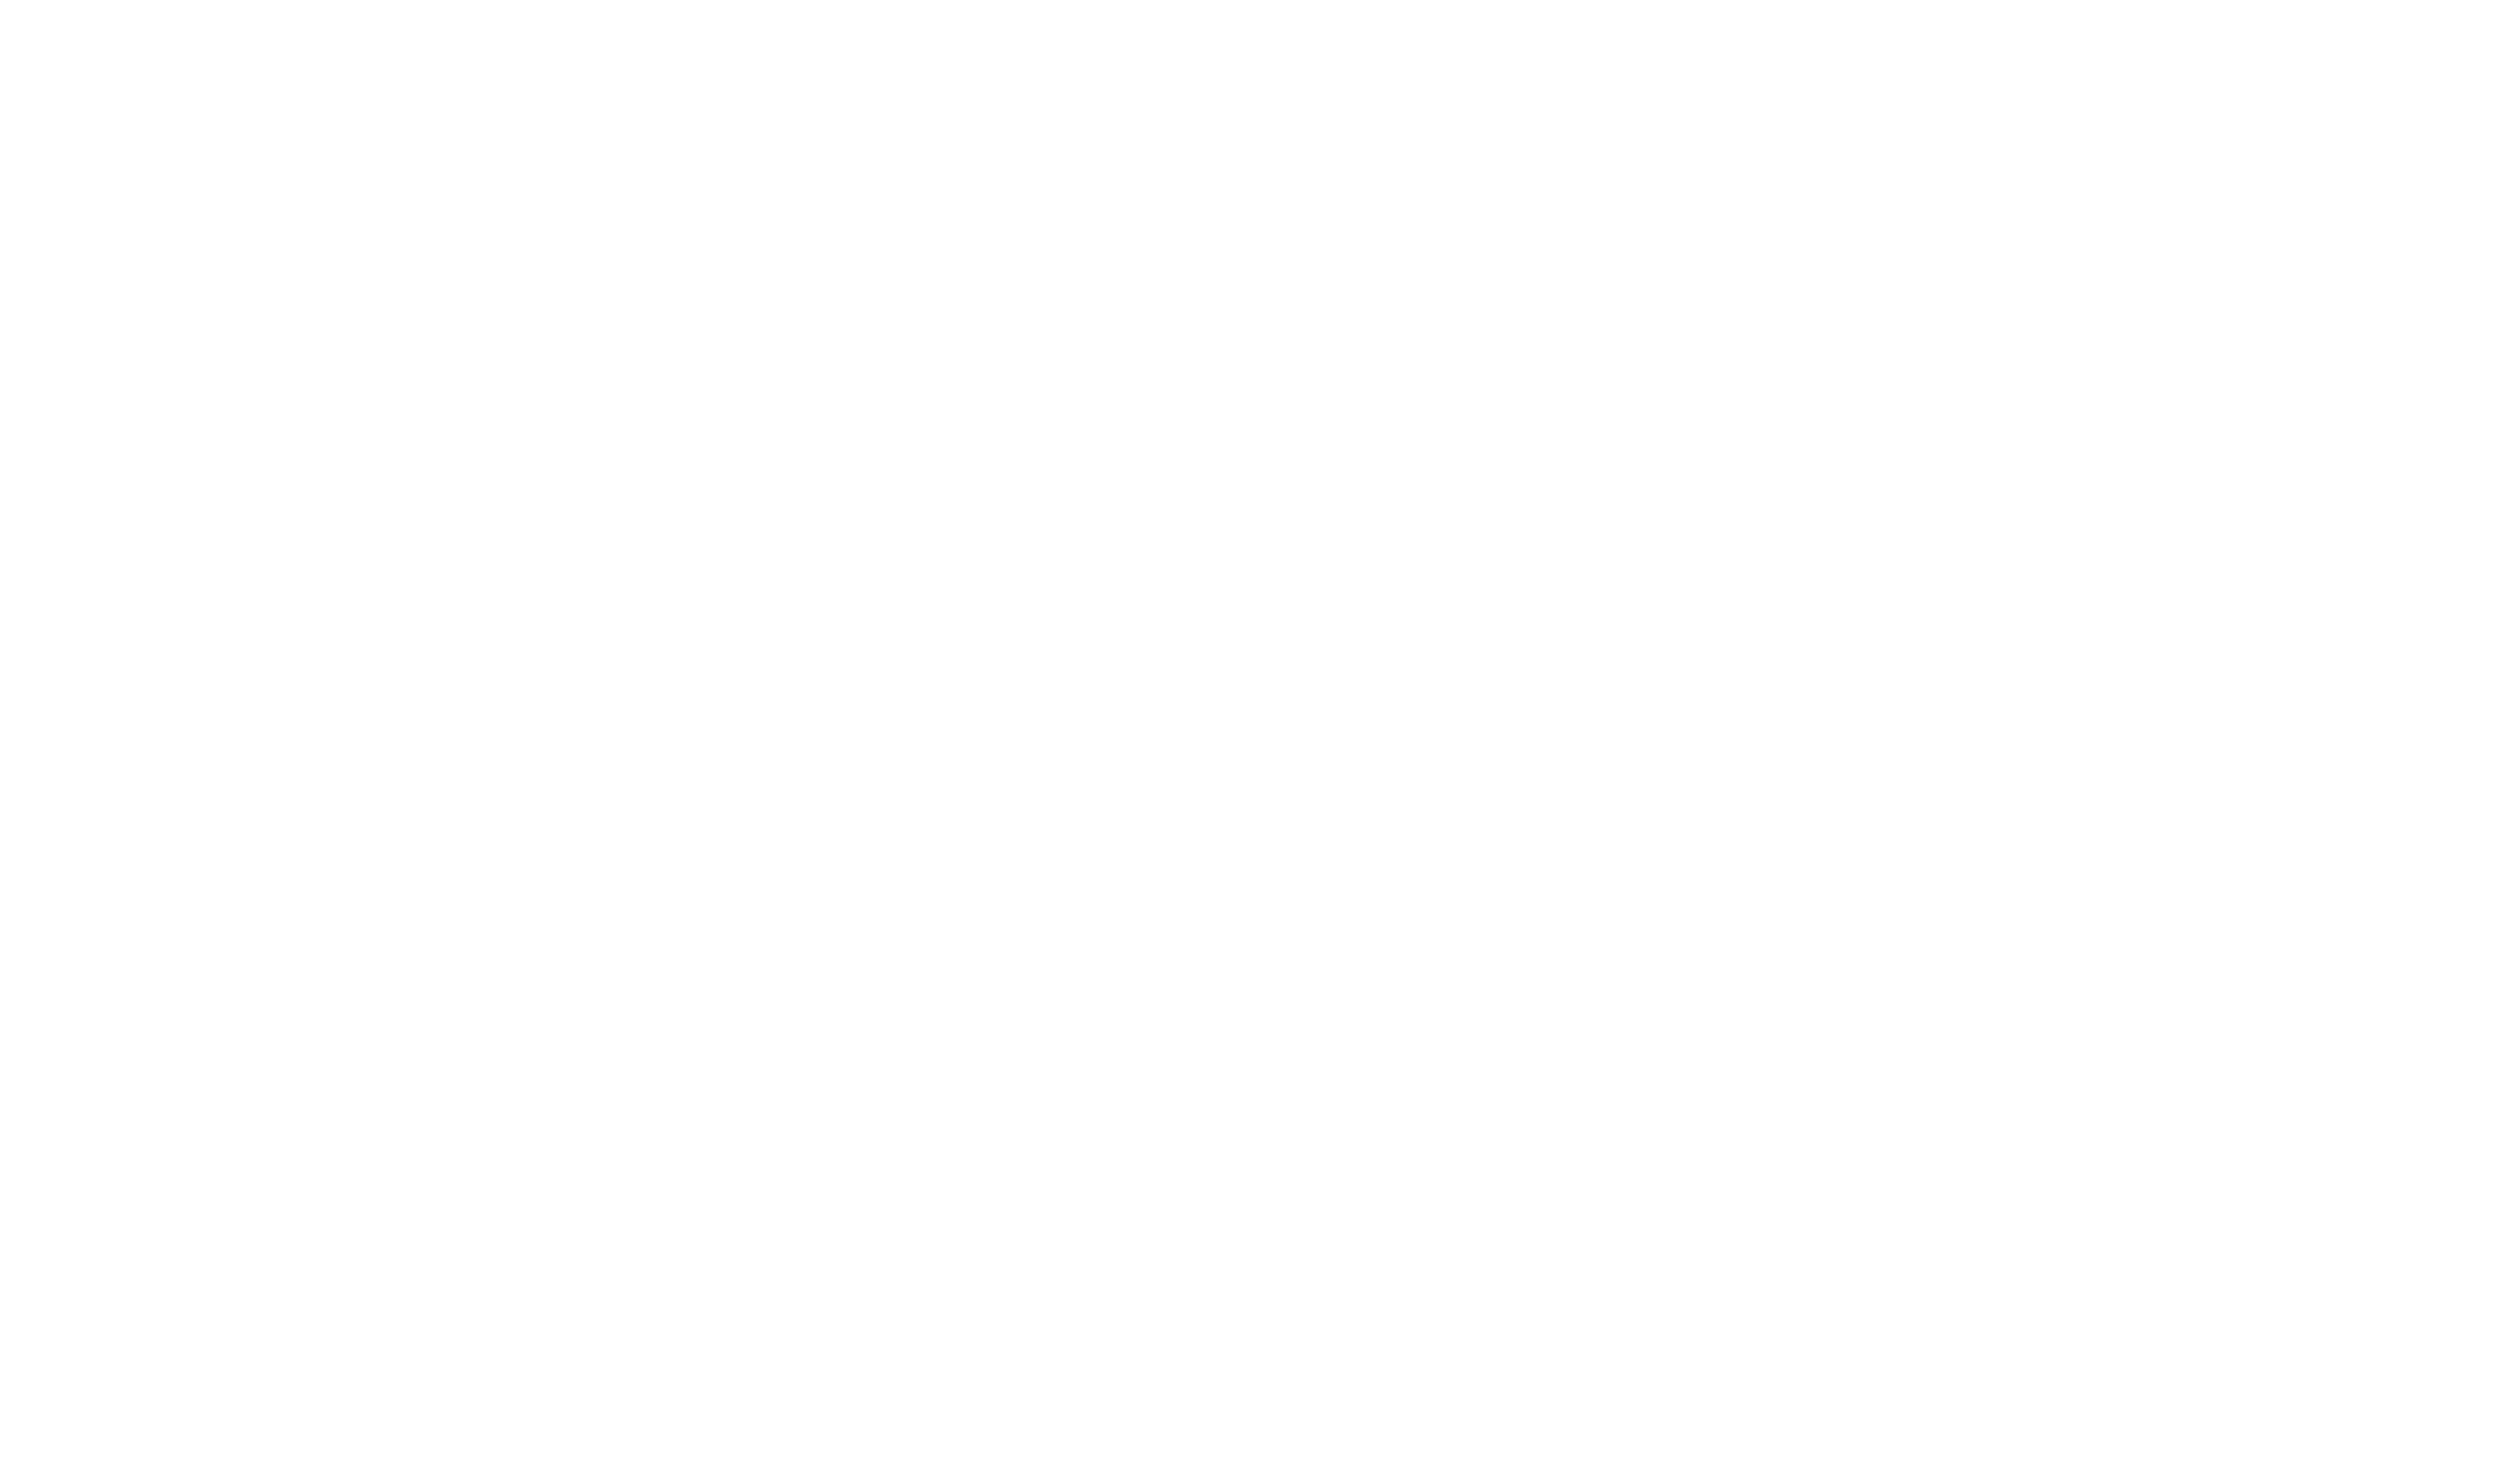 logo of Sifox